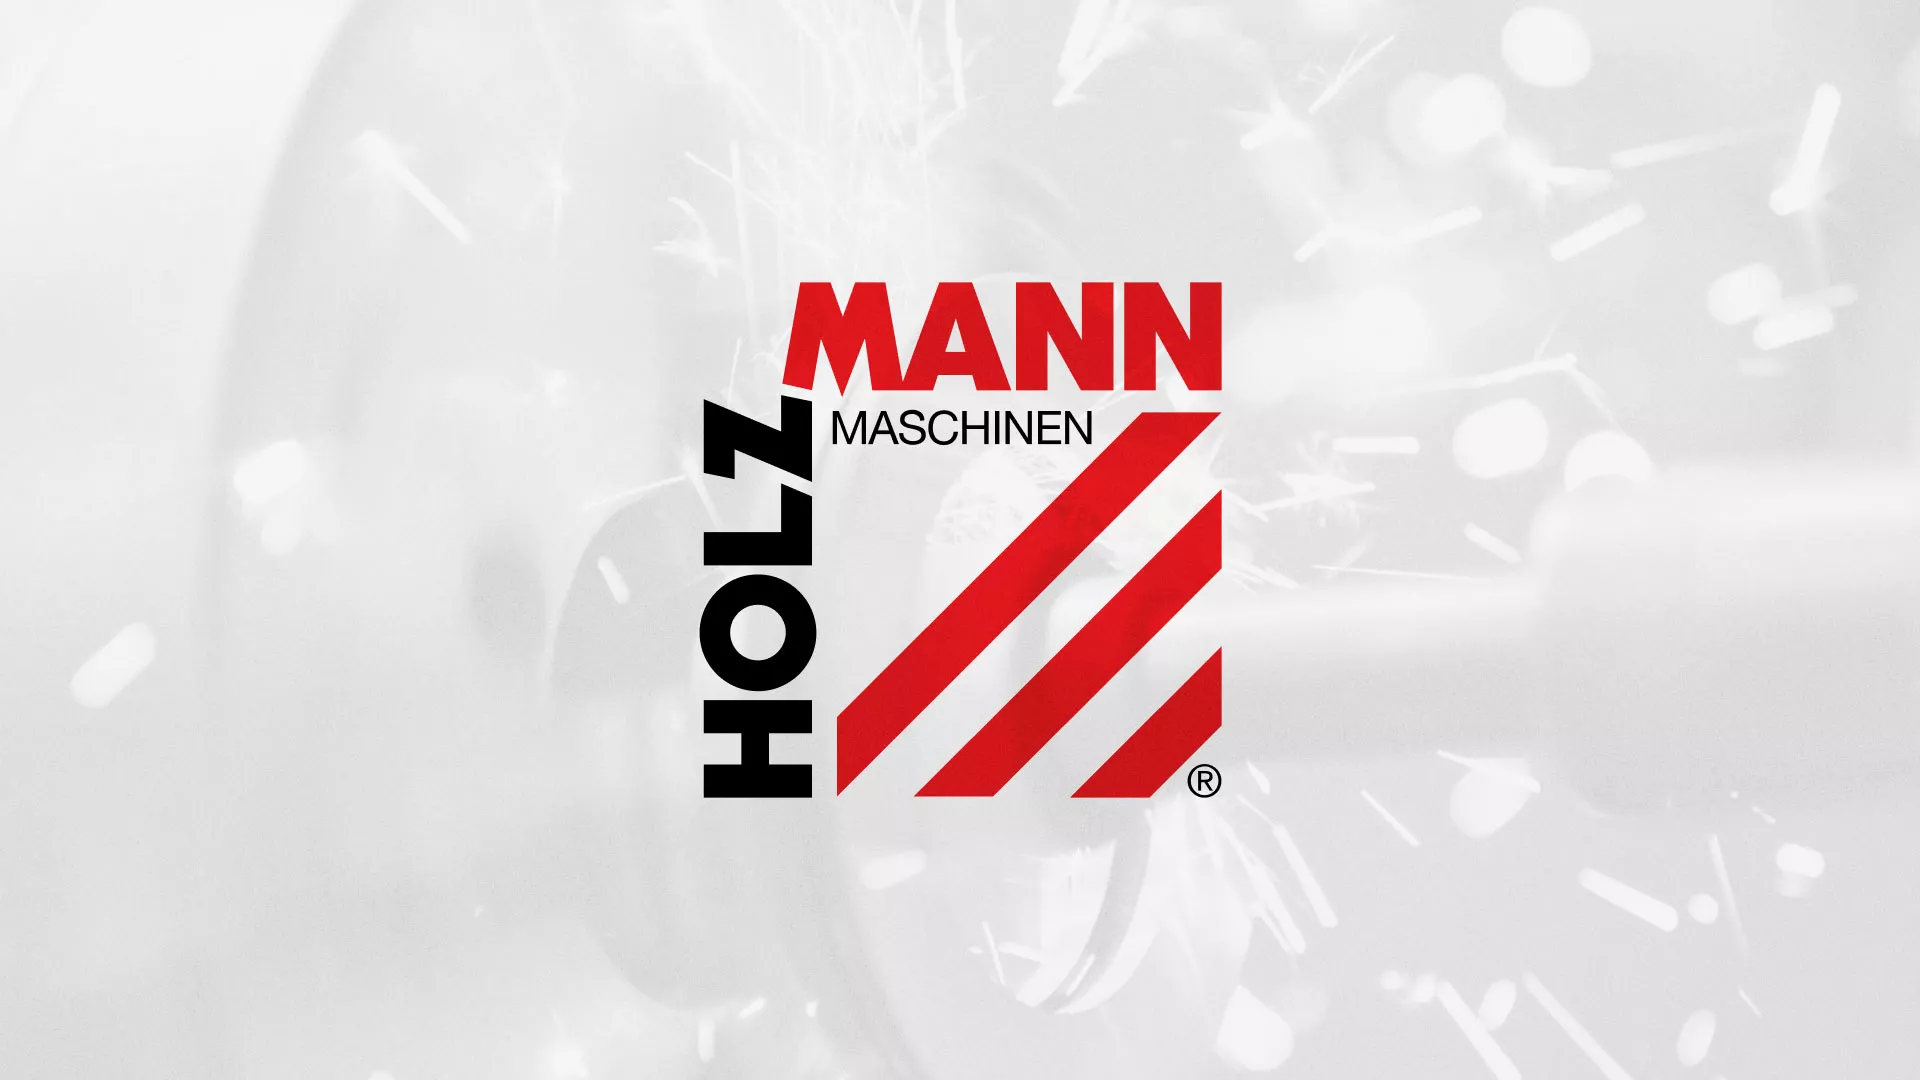 Создание сайта компании «HOLZMANN Maschinen GmbH» в Поворино